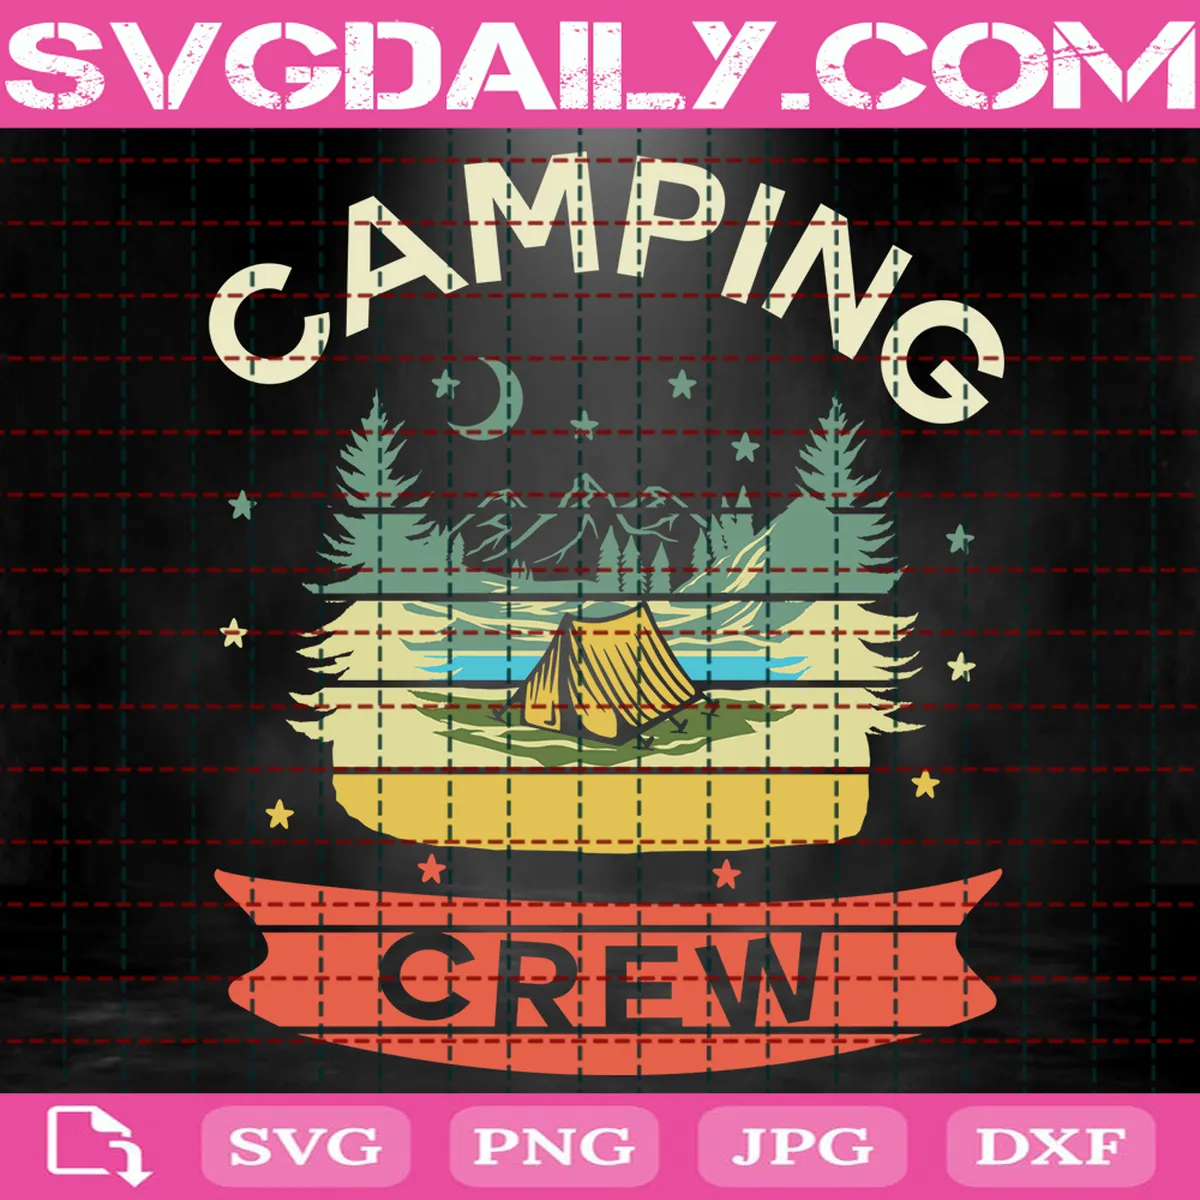 Camping Crew Svg